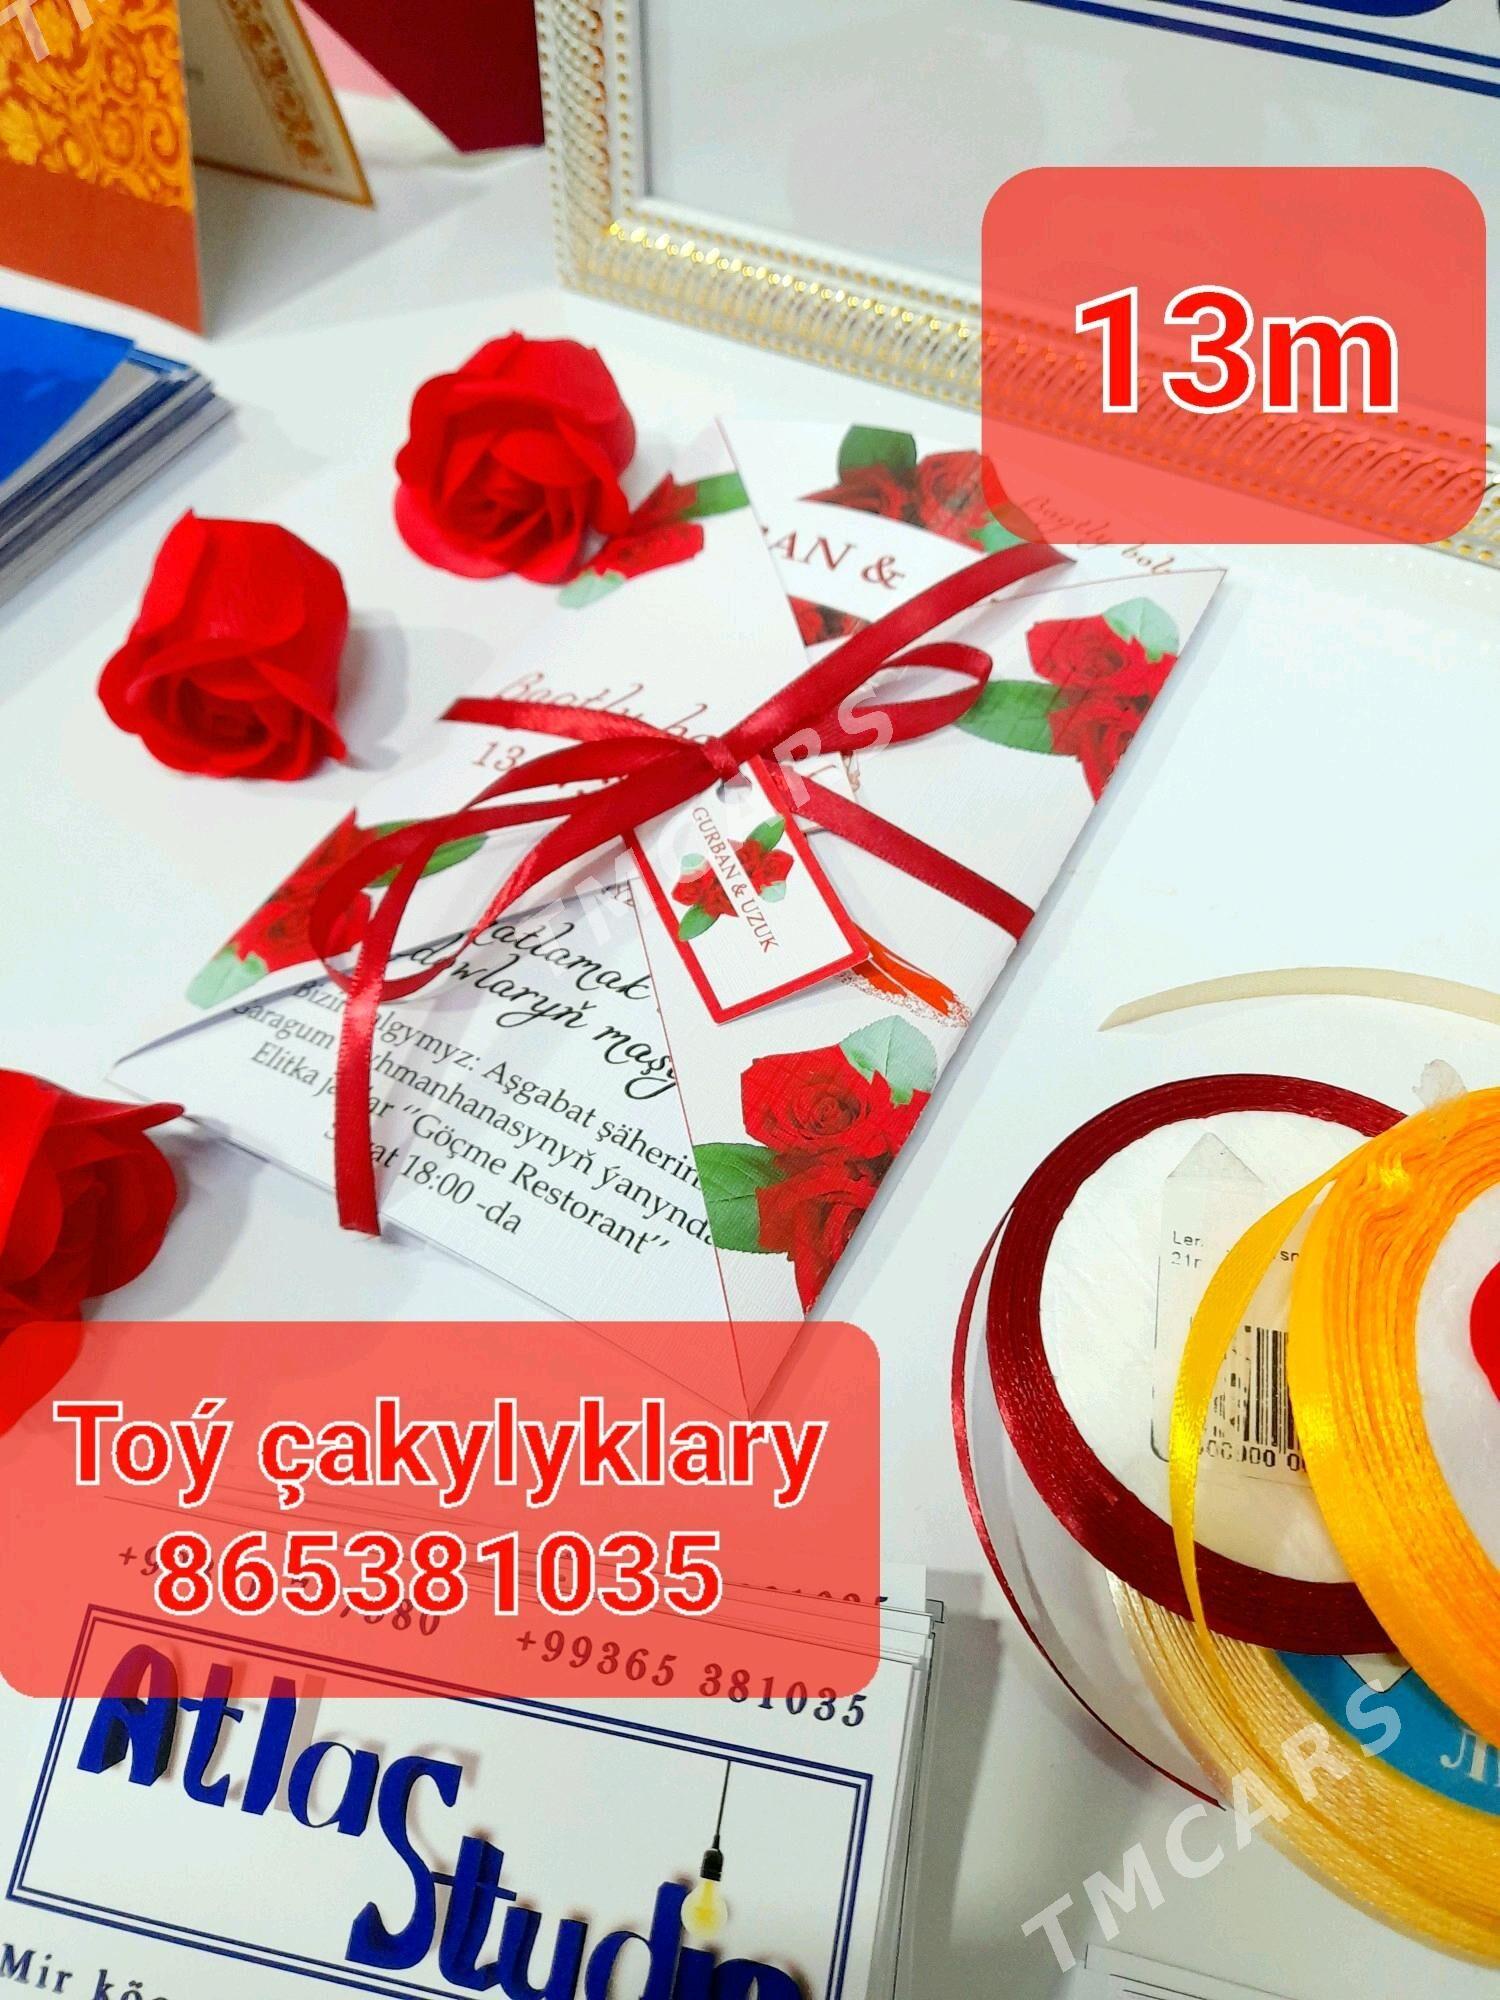 Toy cakylyklar we toy paylar - Ашхабад - img 3